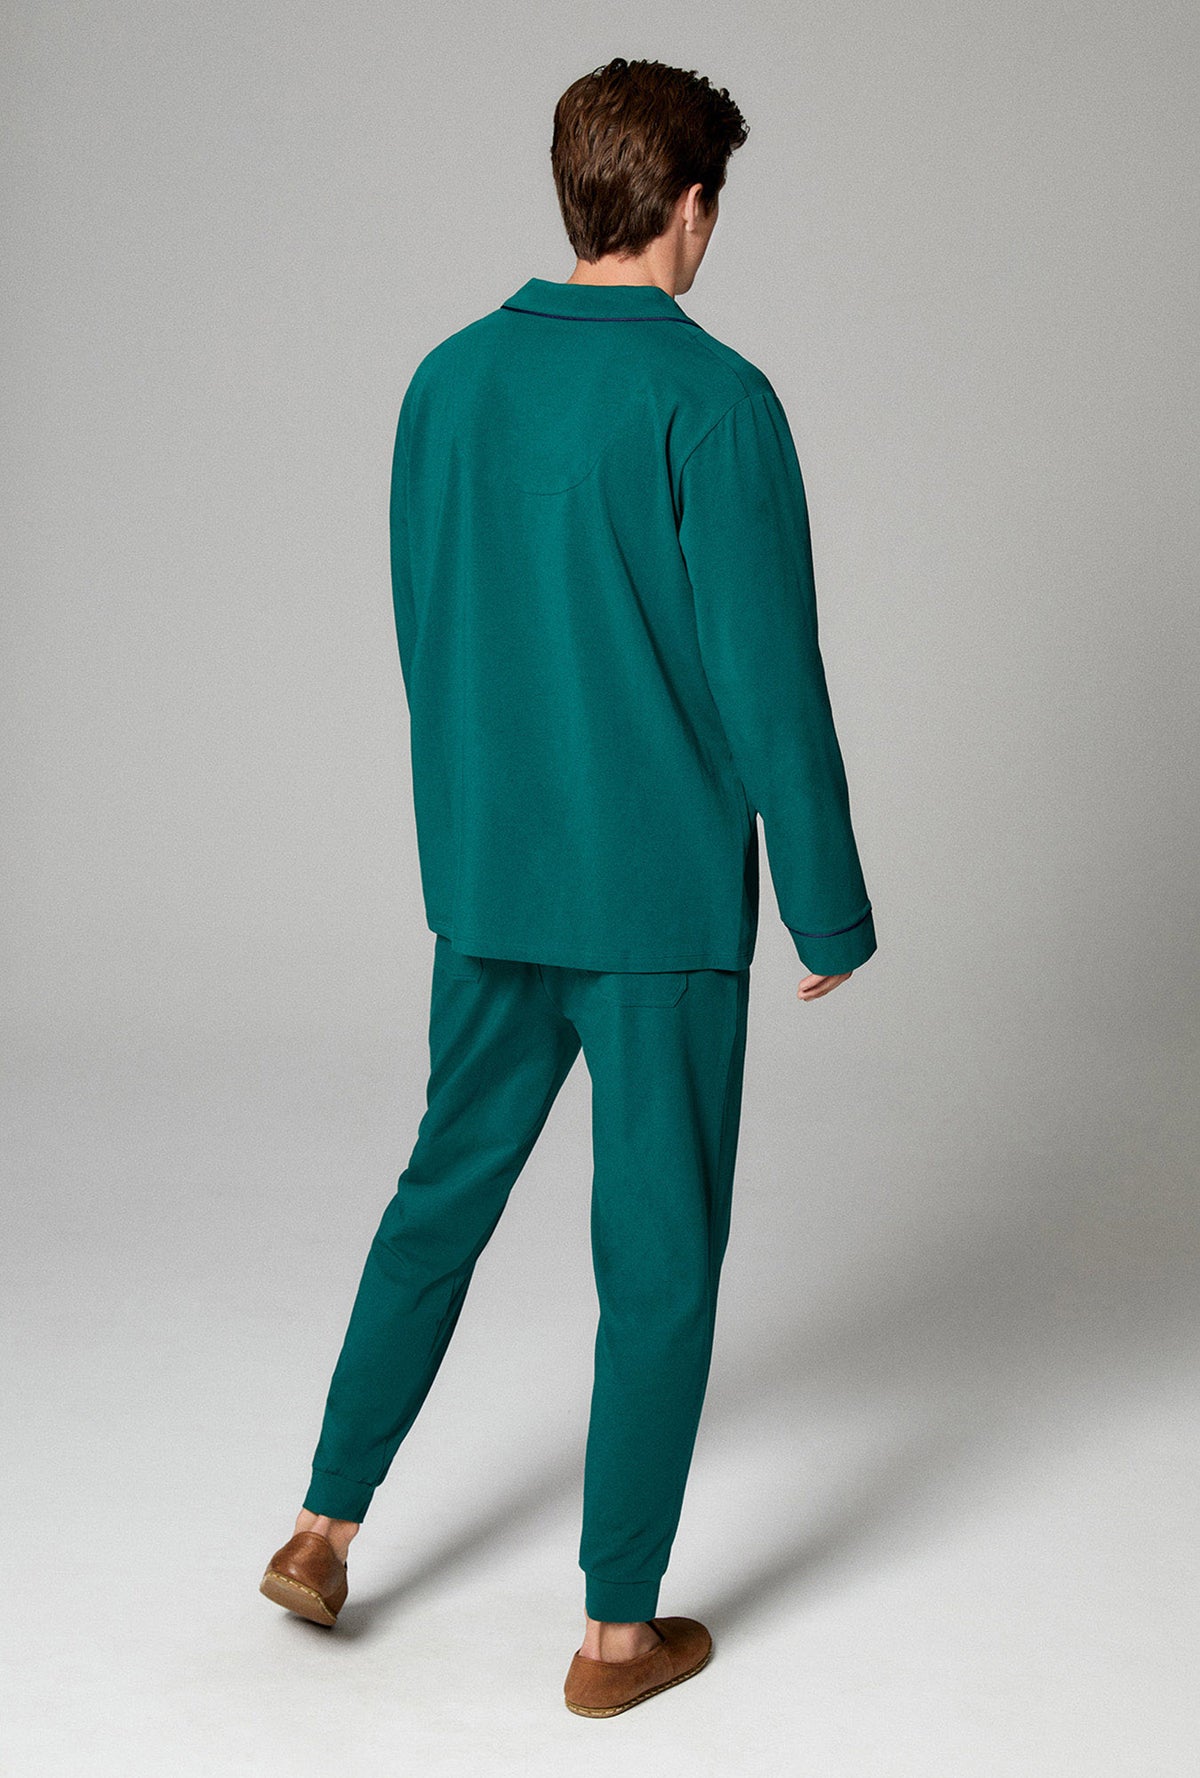 Emerald Green Men's Long Sleeve and Jogger Stretch Jersey PJ Set